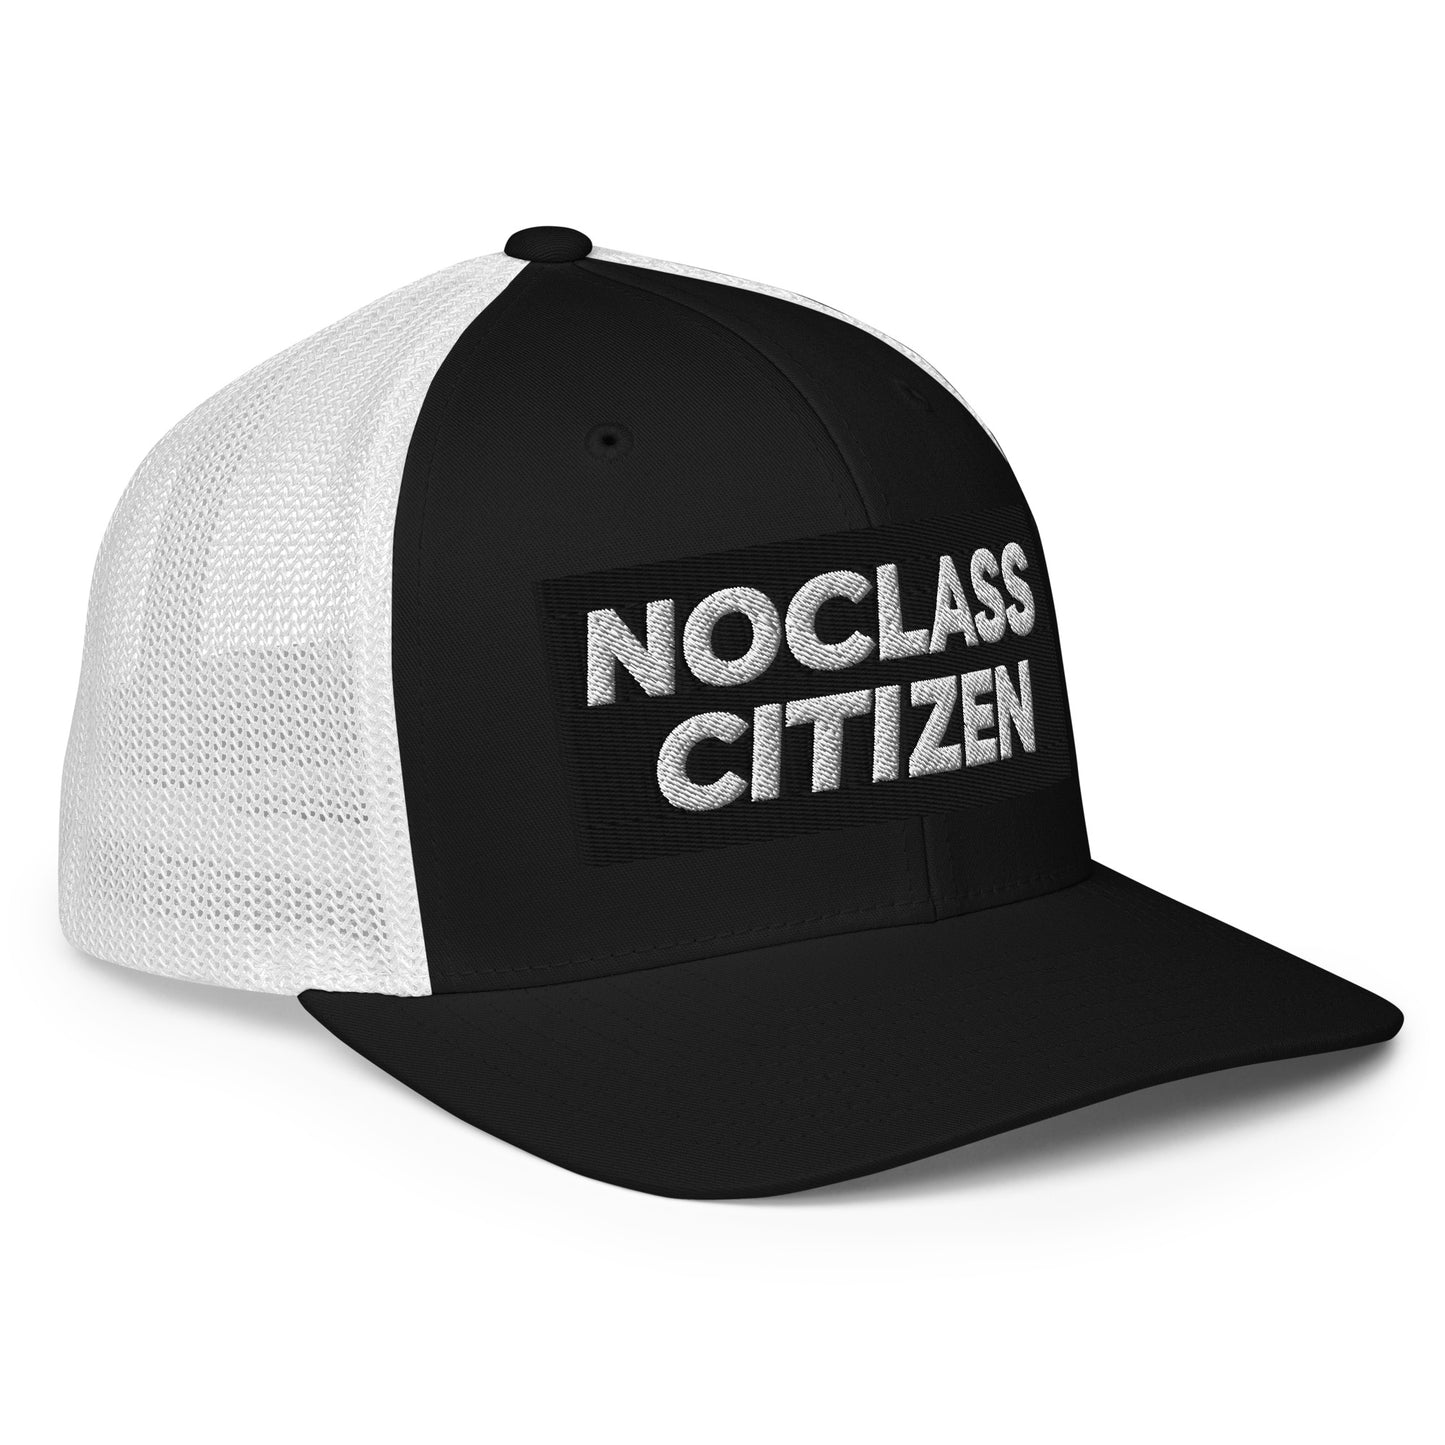 NOCLASS CITIZEN Text - Closed-Back Trucker Cap